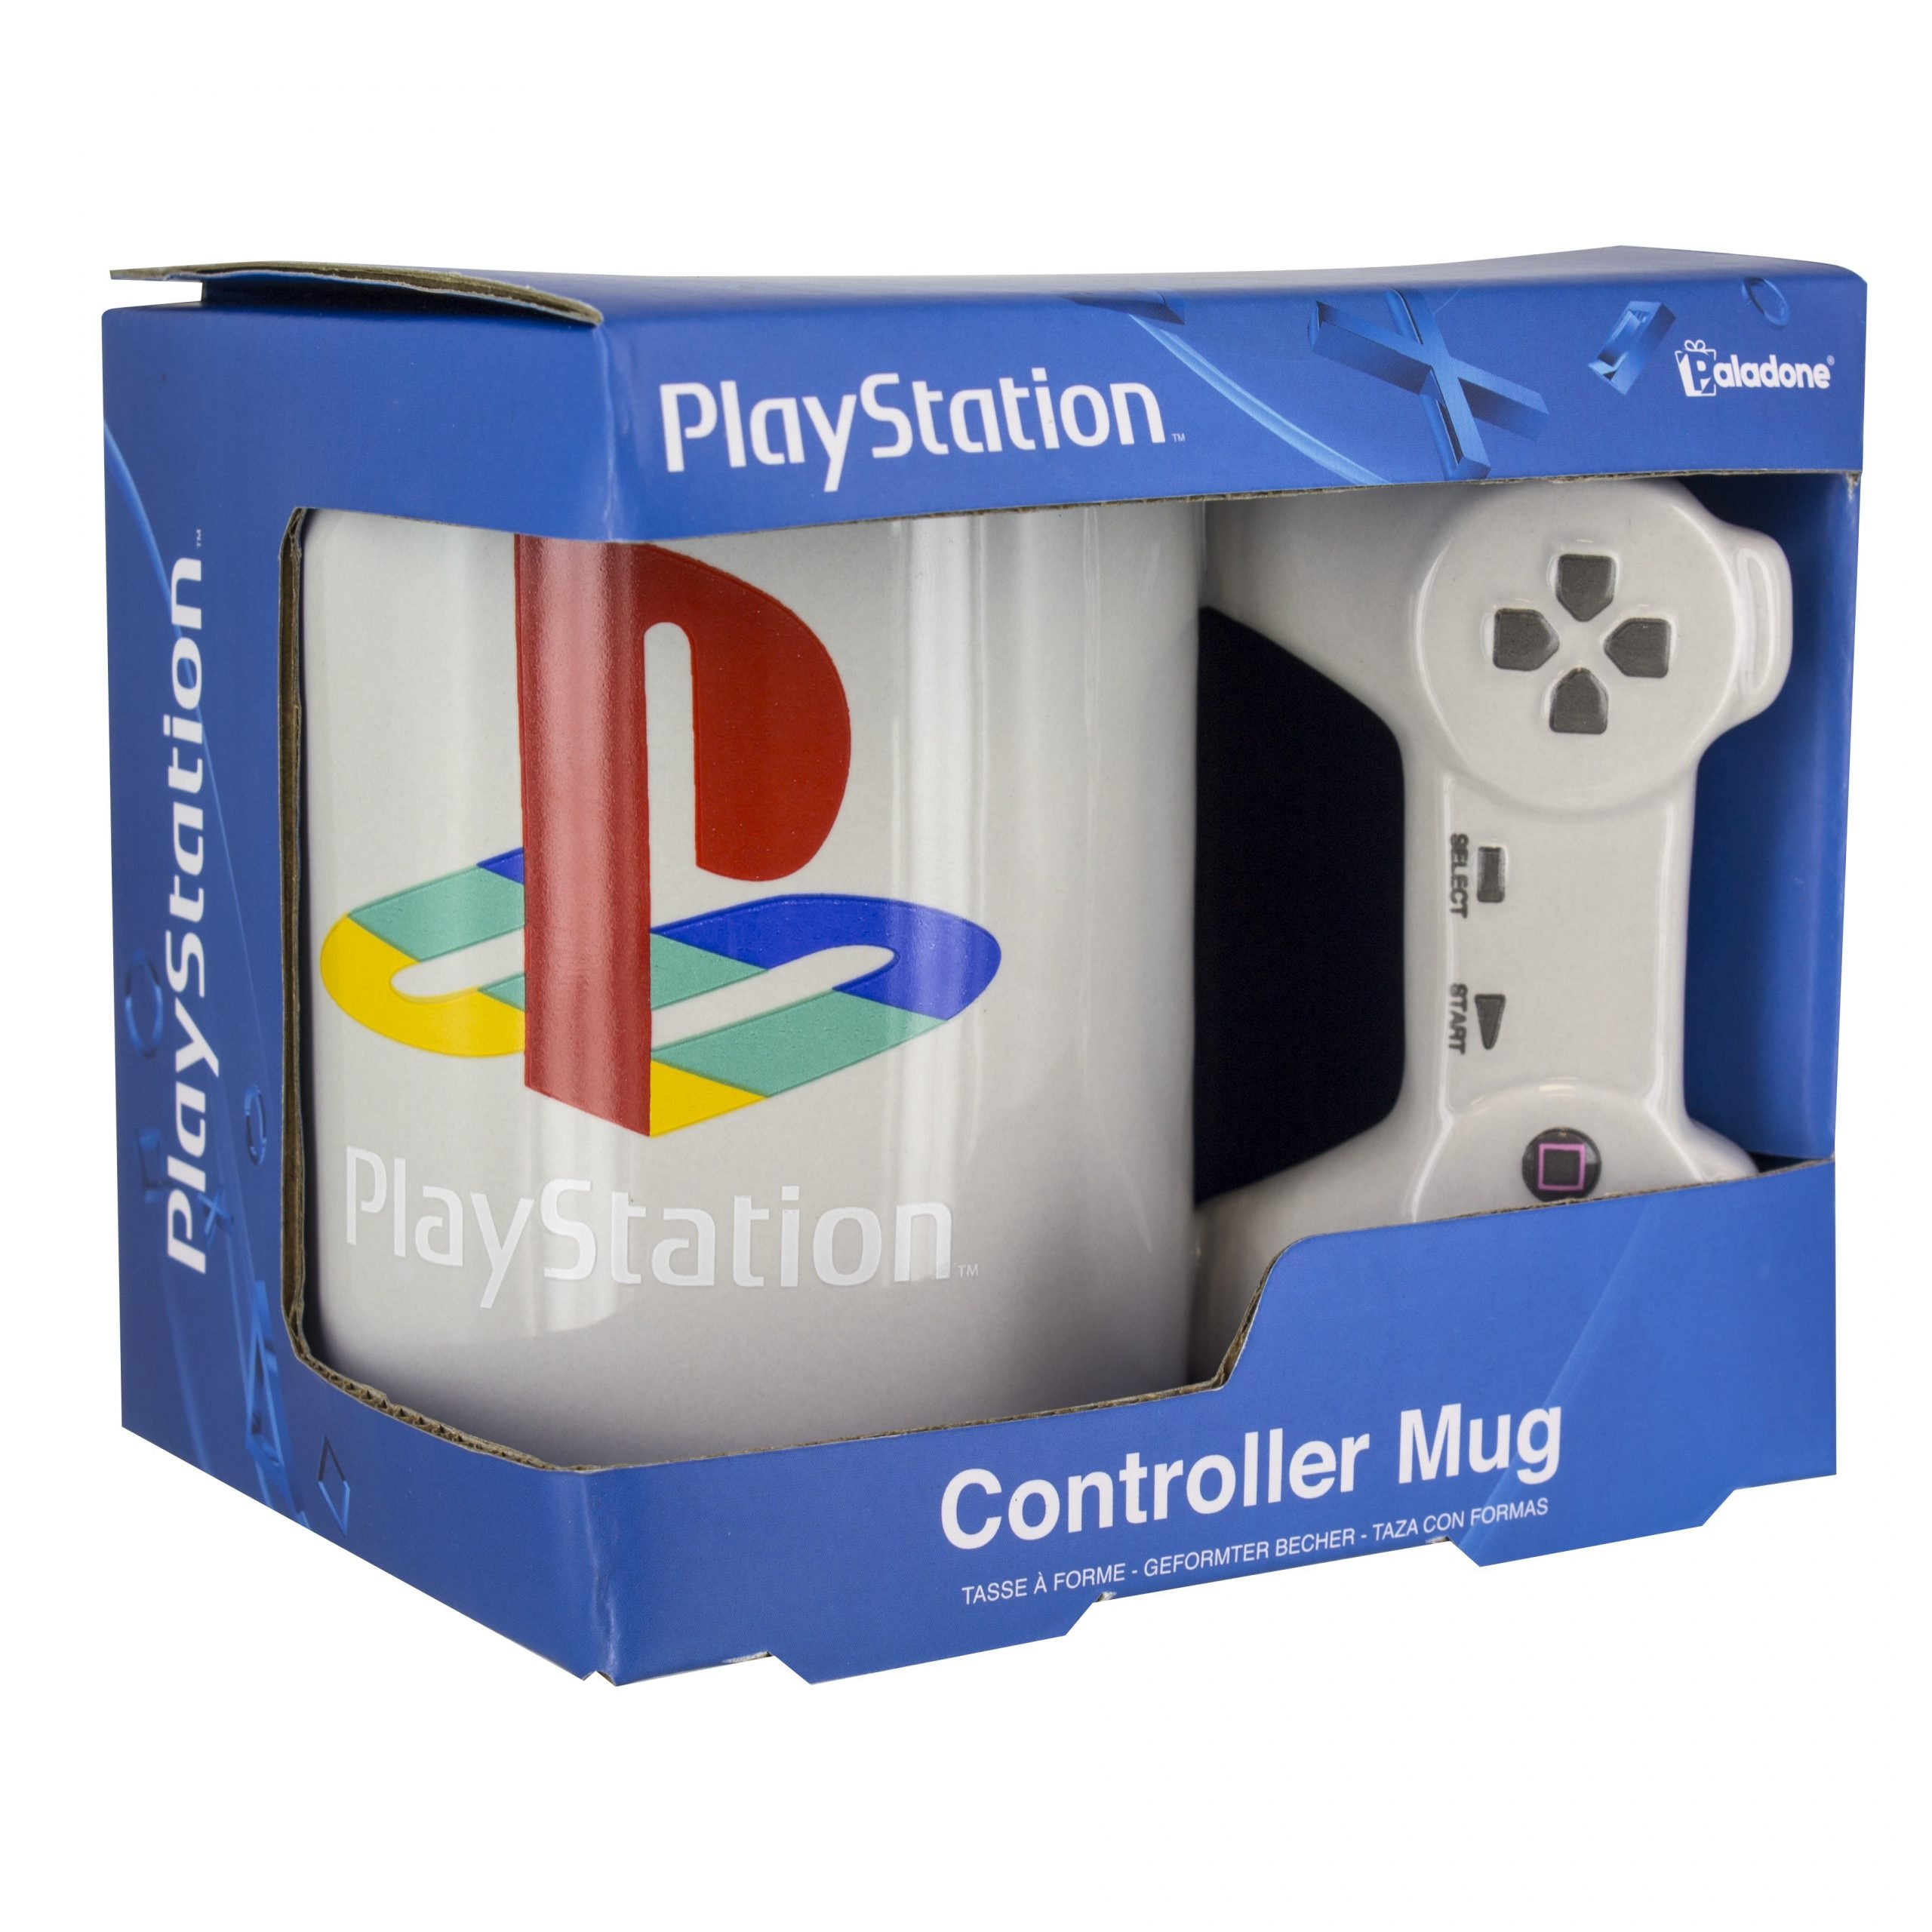 Mug - Playstation Controller